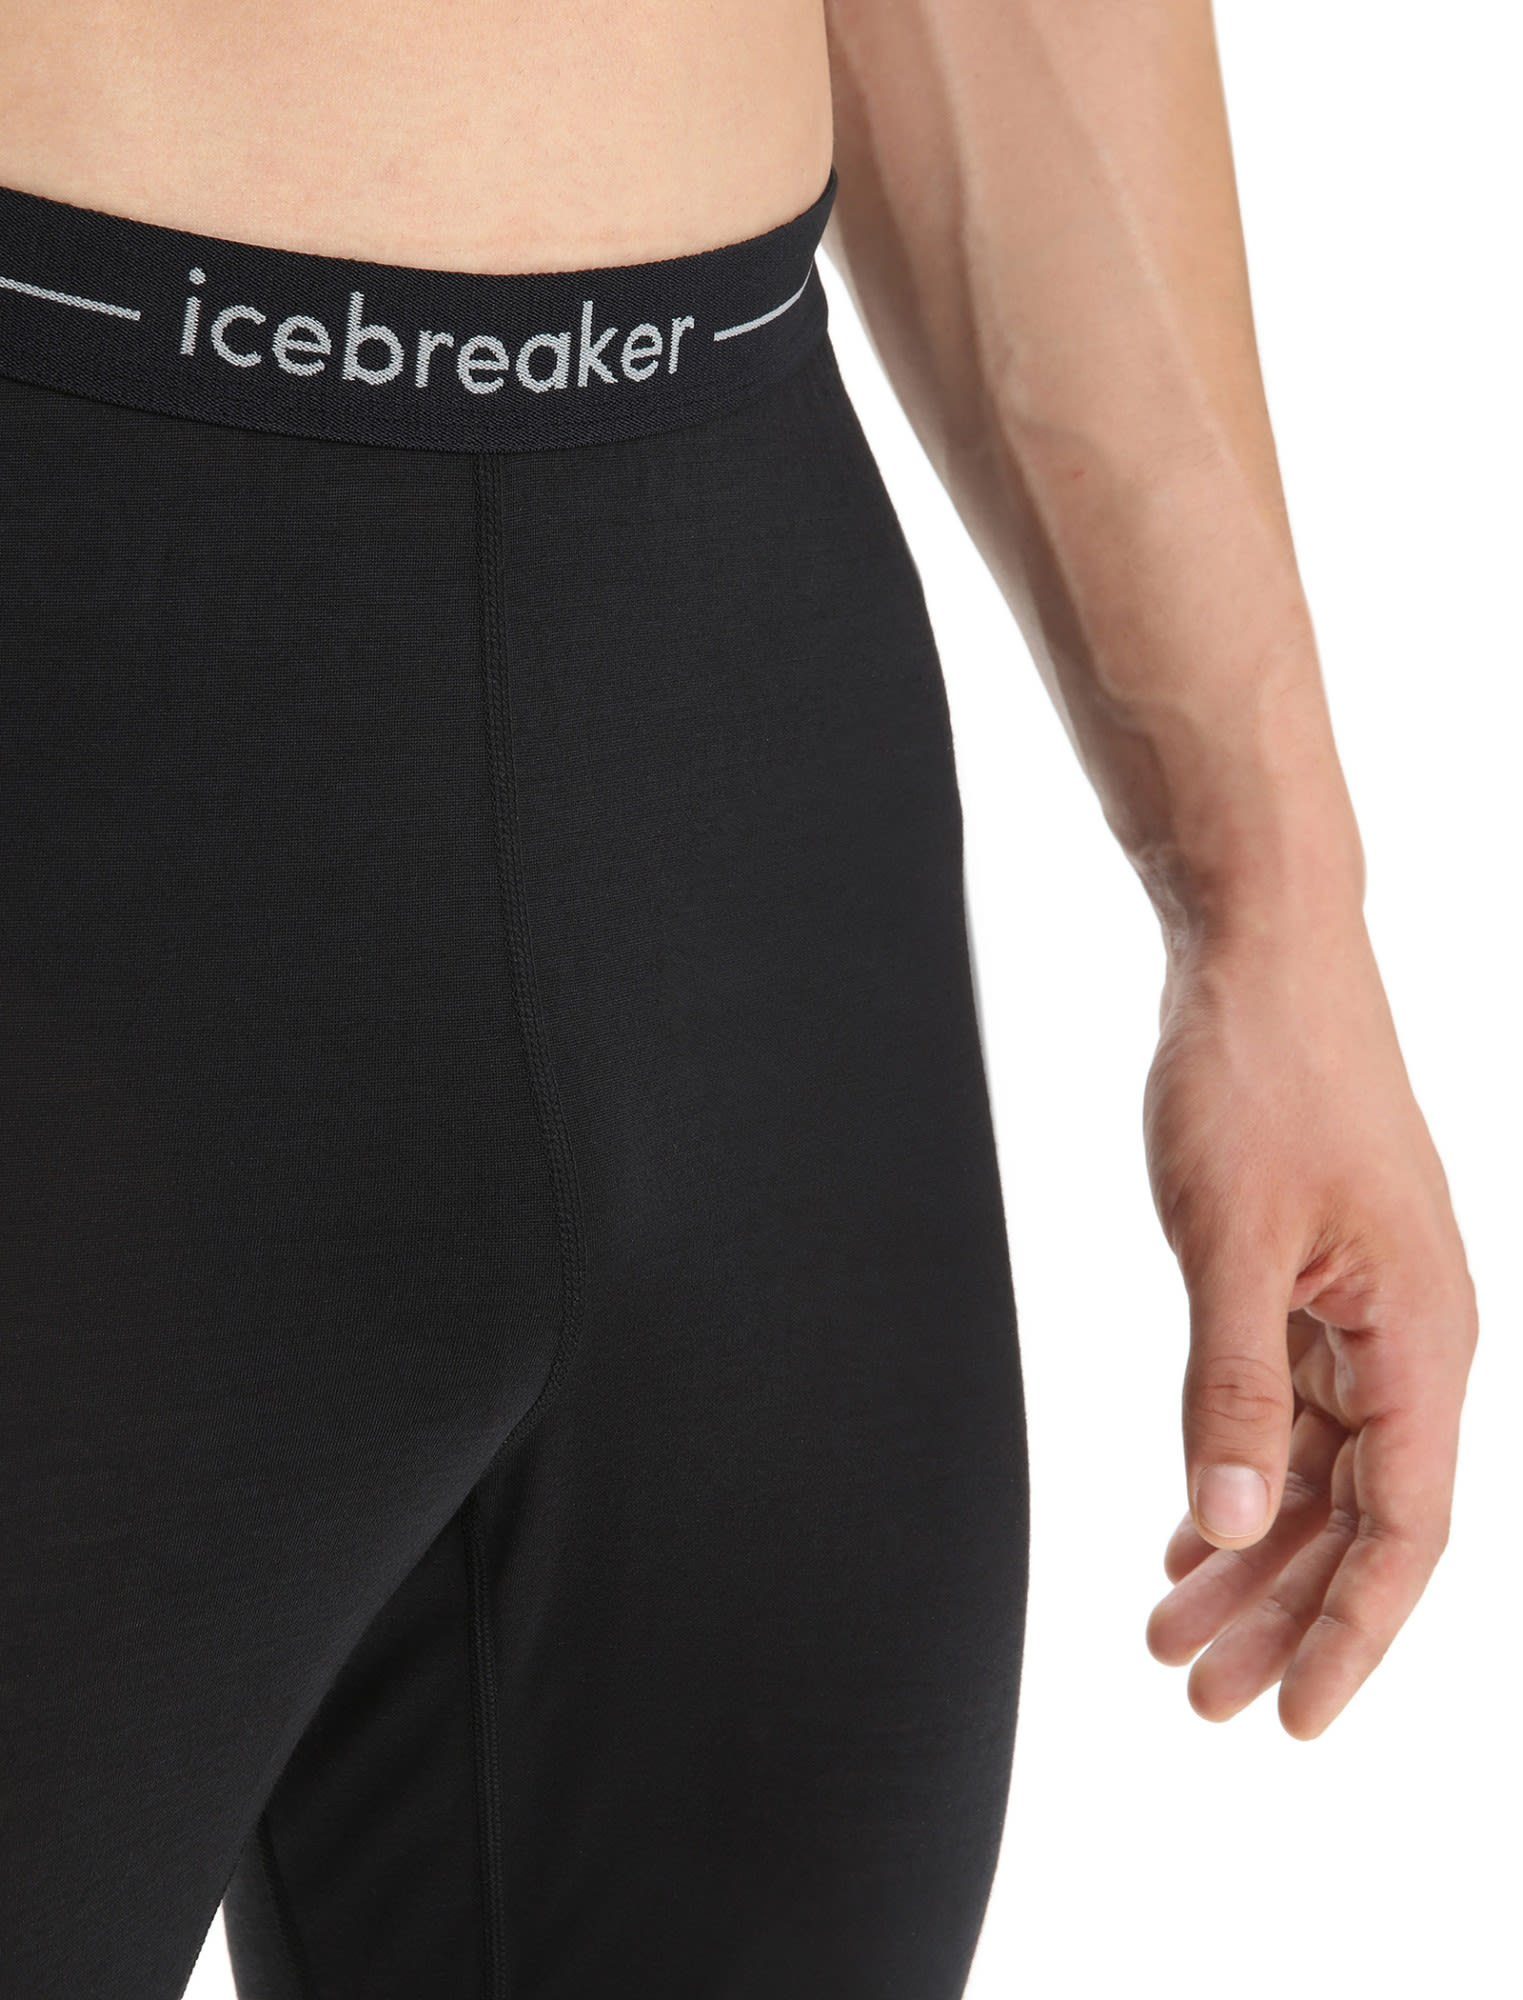 125 Black CB Grey - Unterhose Heather M Herren - Icebreaker Zoneknit Kurze Lange Icebreaker Leggings